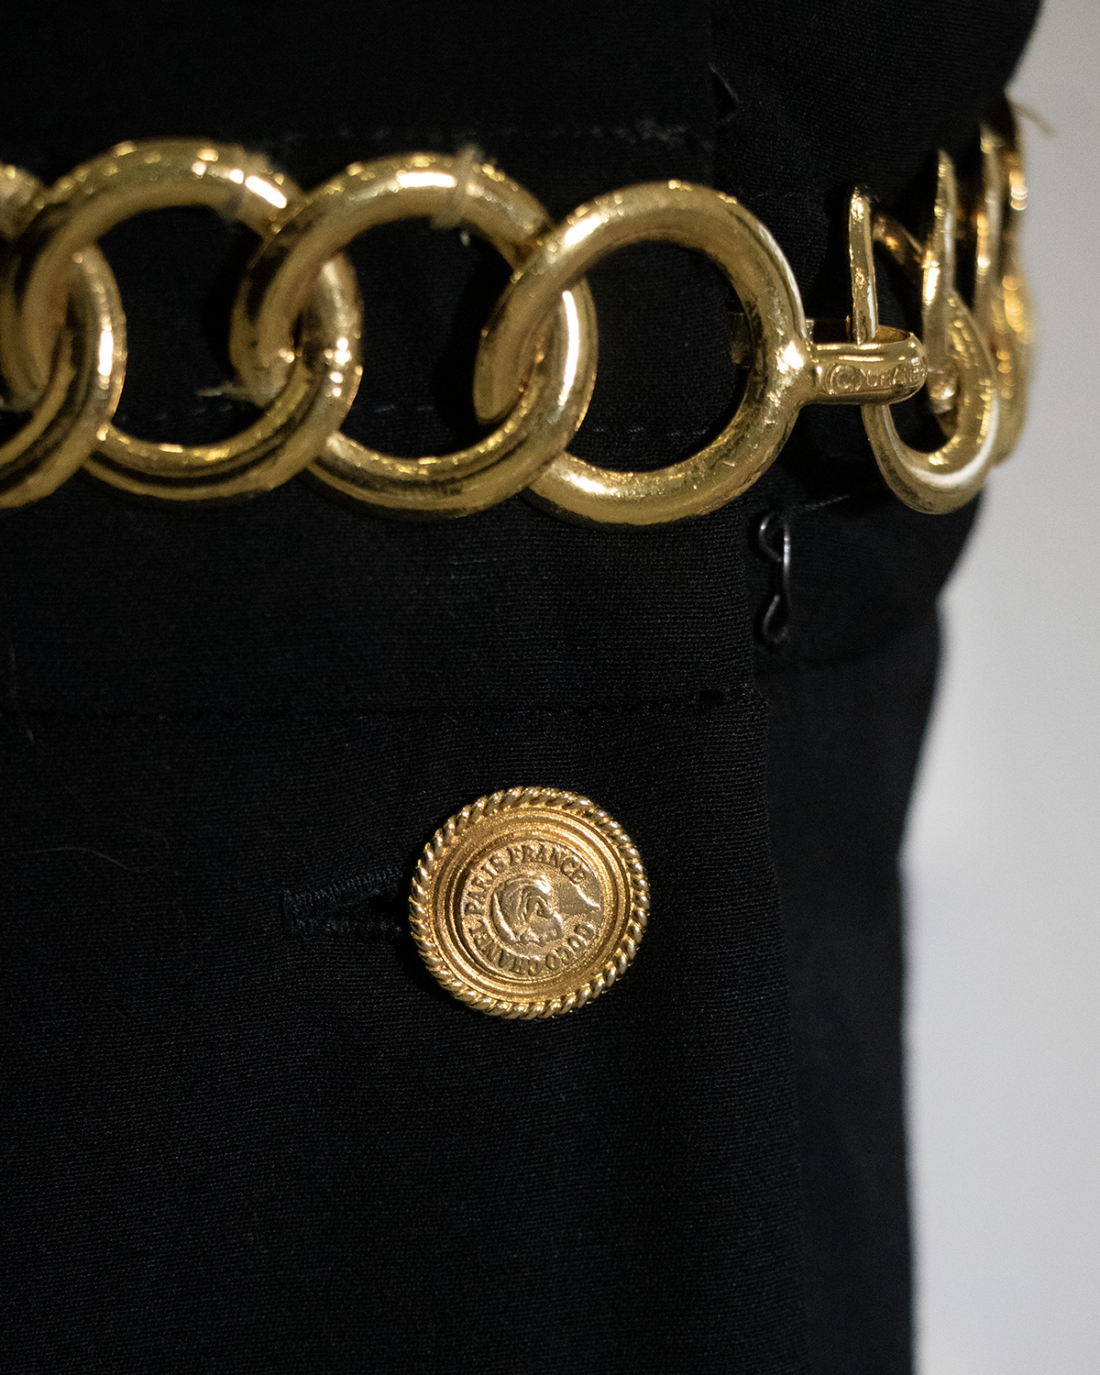 Chanel black dress with golden details 1980s